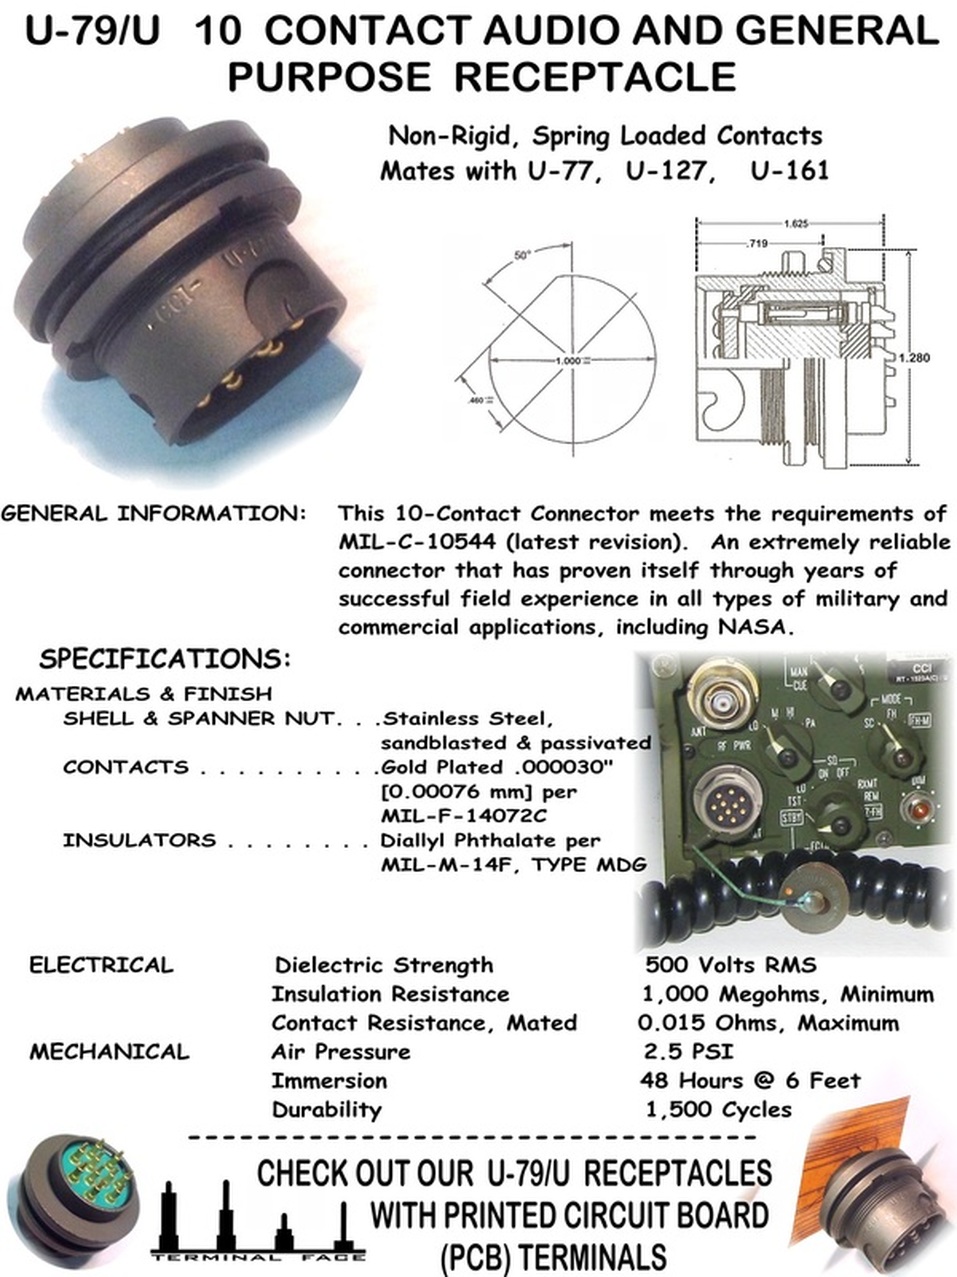 U660E Transmission parts, repair guidelines, problems, manuals